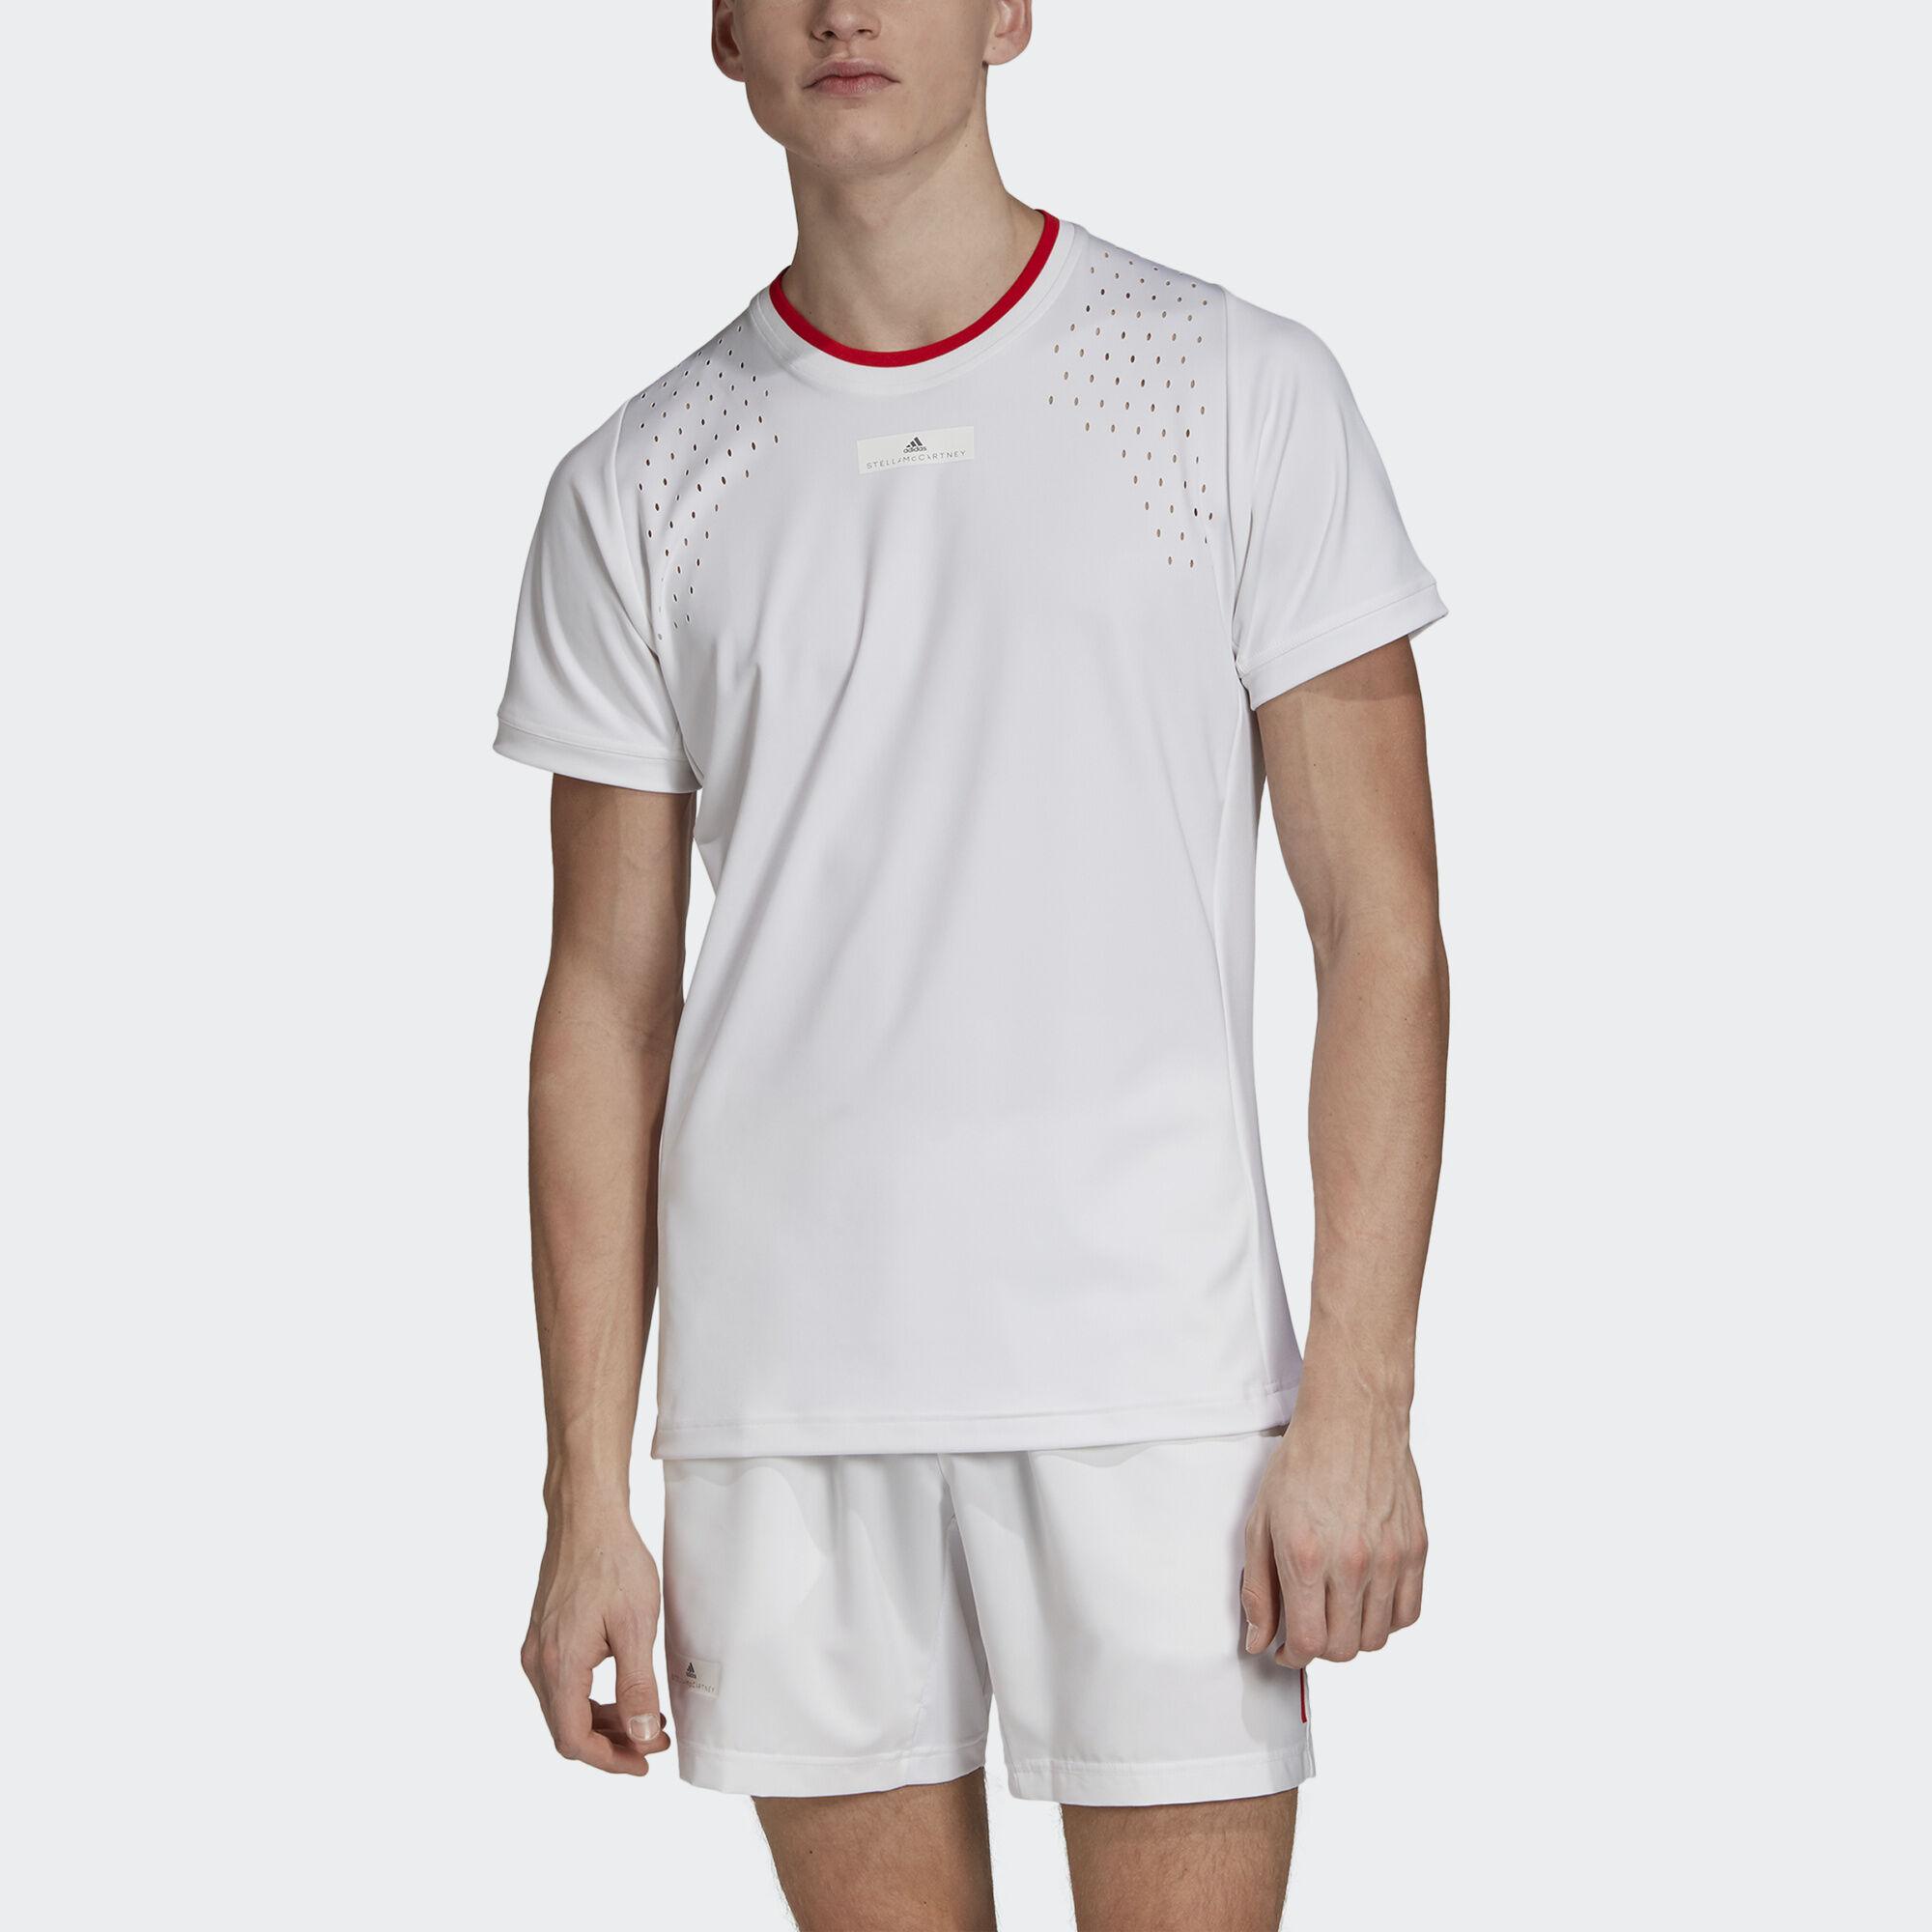 Adidas Mens Stella McCartney Court T-Shirt - White - Tennisnuts.com